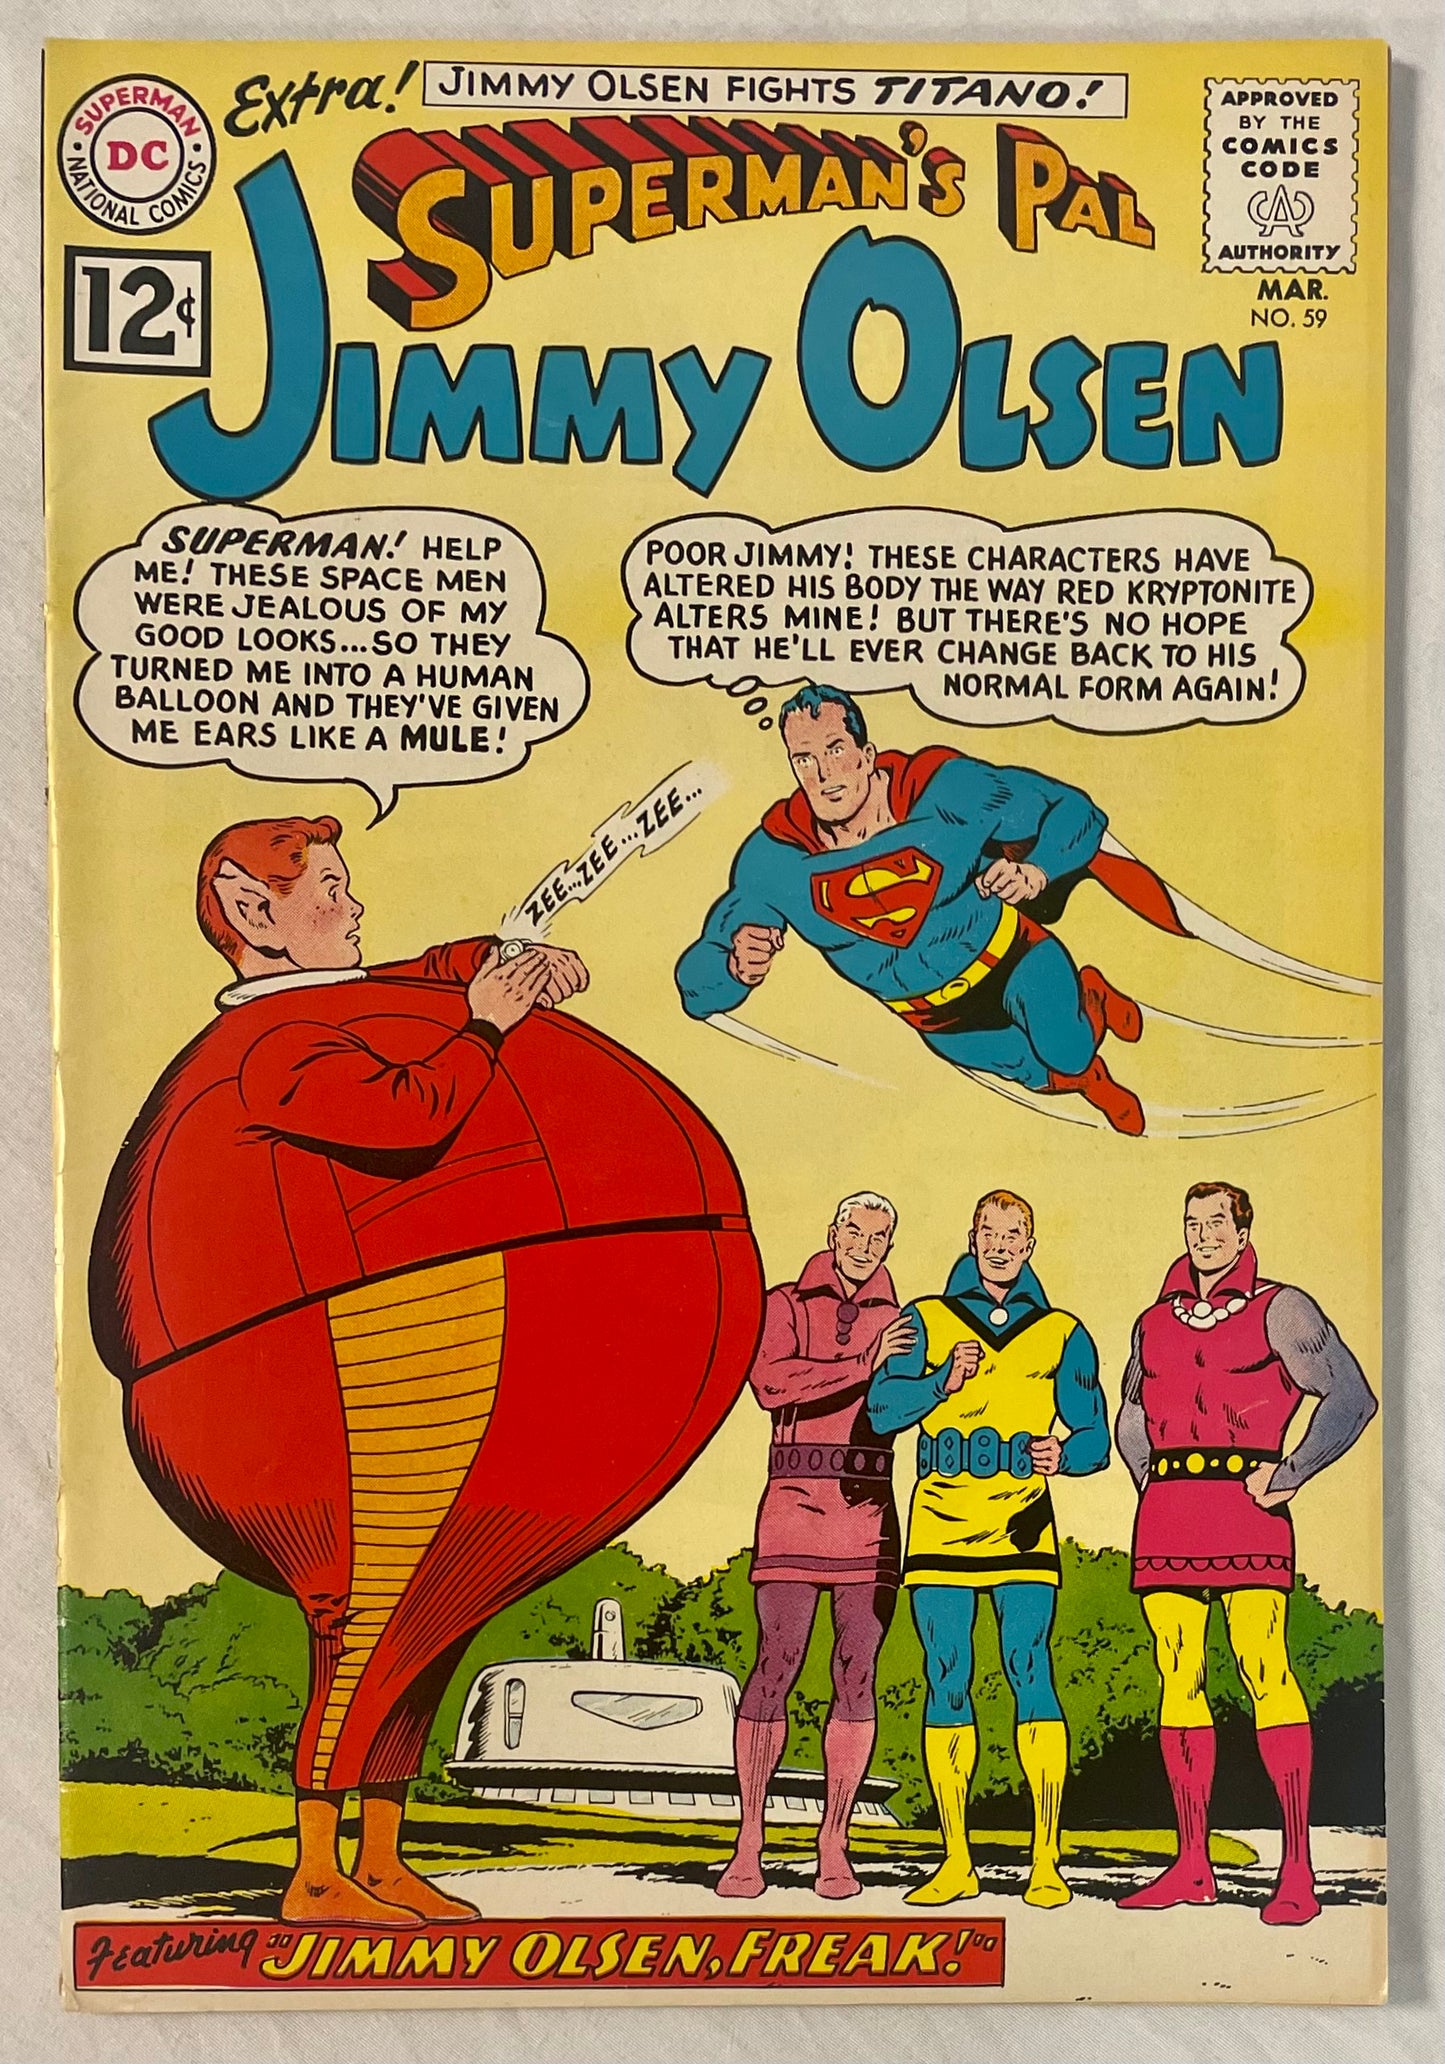 DC Comics Superman's Pal Jimmy Olsen No. 59